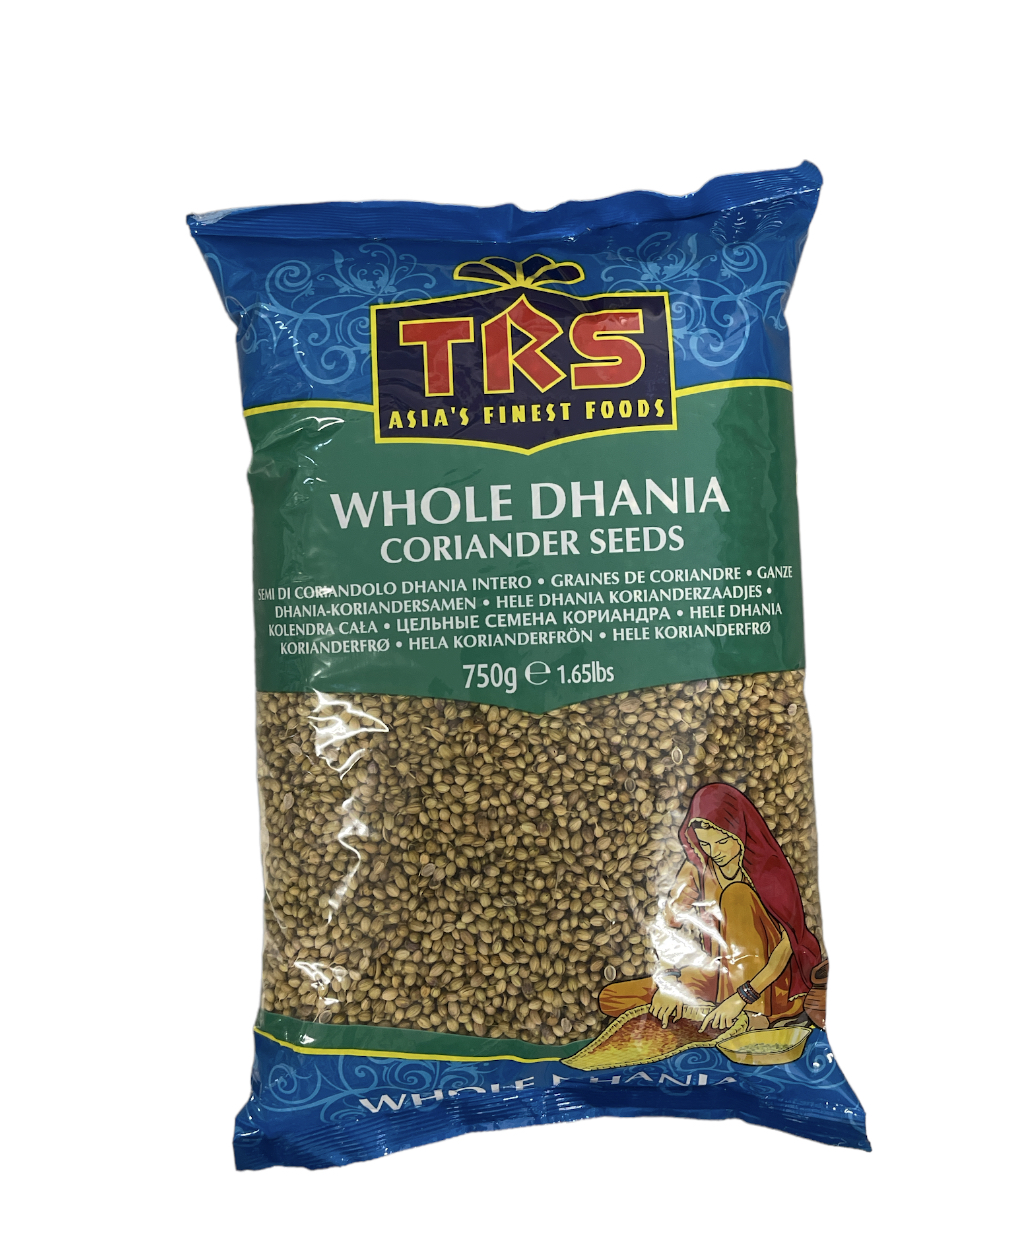 TRS Coriander Seeds (Whole Dhania)(ganze Koriandersamen) 750g